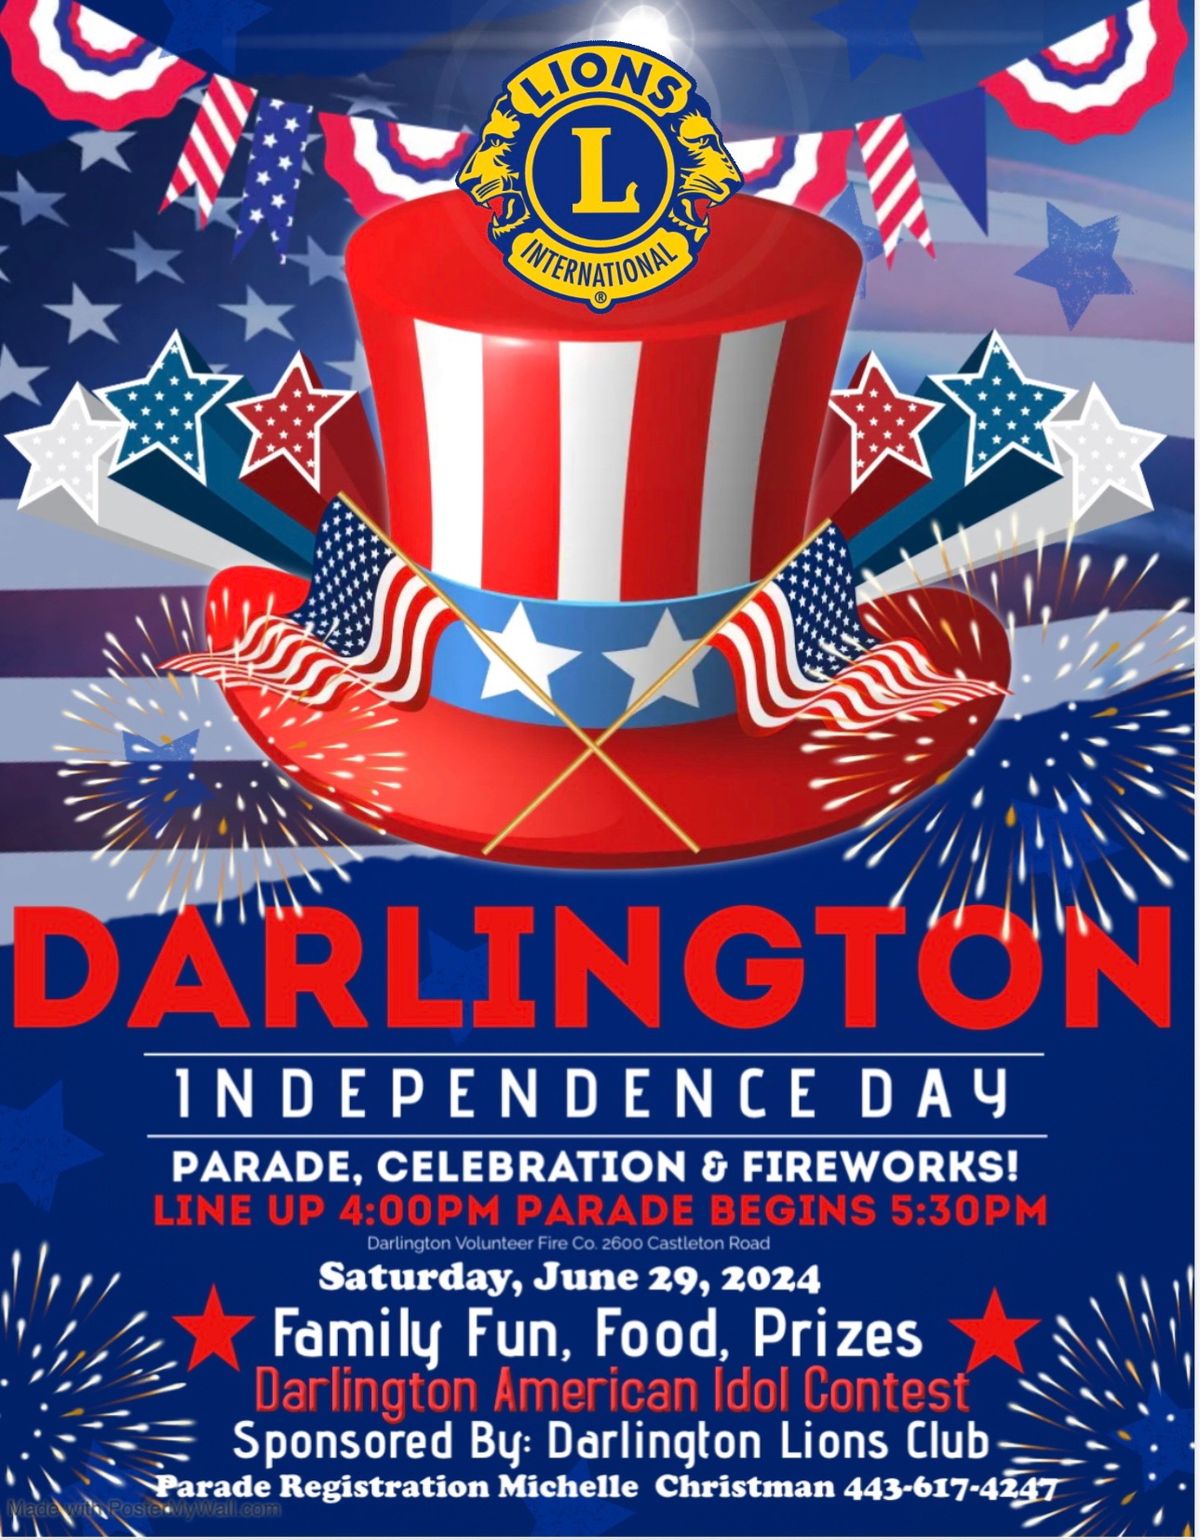 Darlington Independence Day Parade, Celebration and Fireworks!